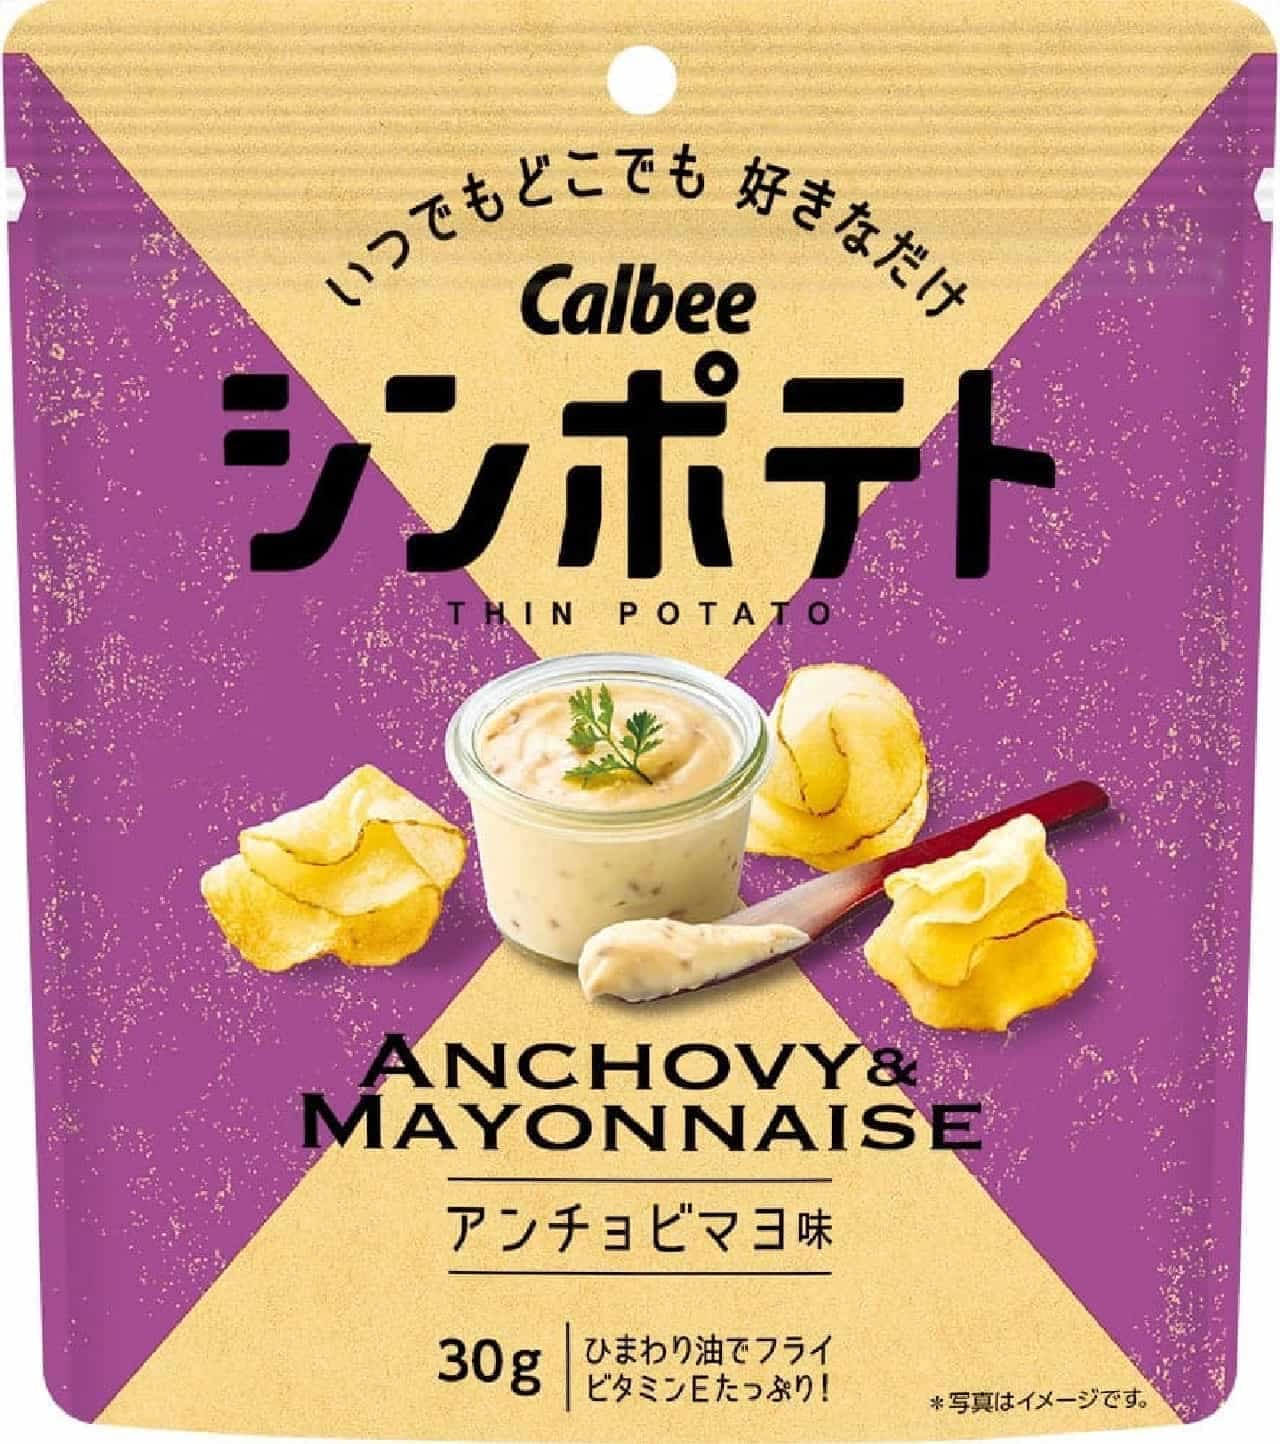 Calbee "Thin Potato Anchovy Mayo Flavor